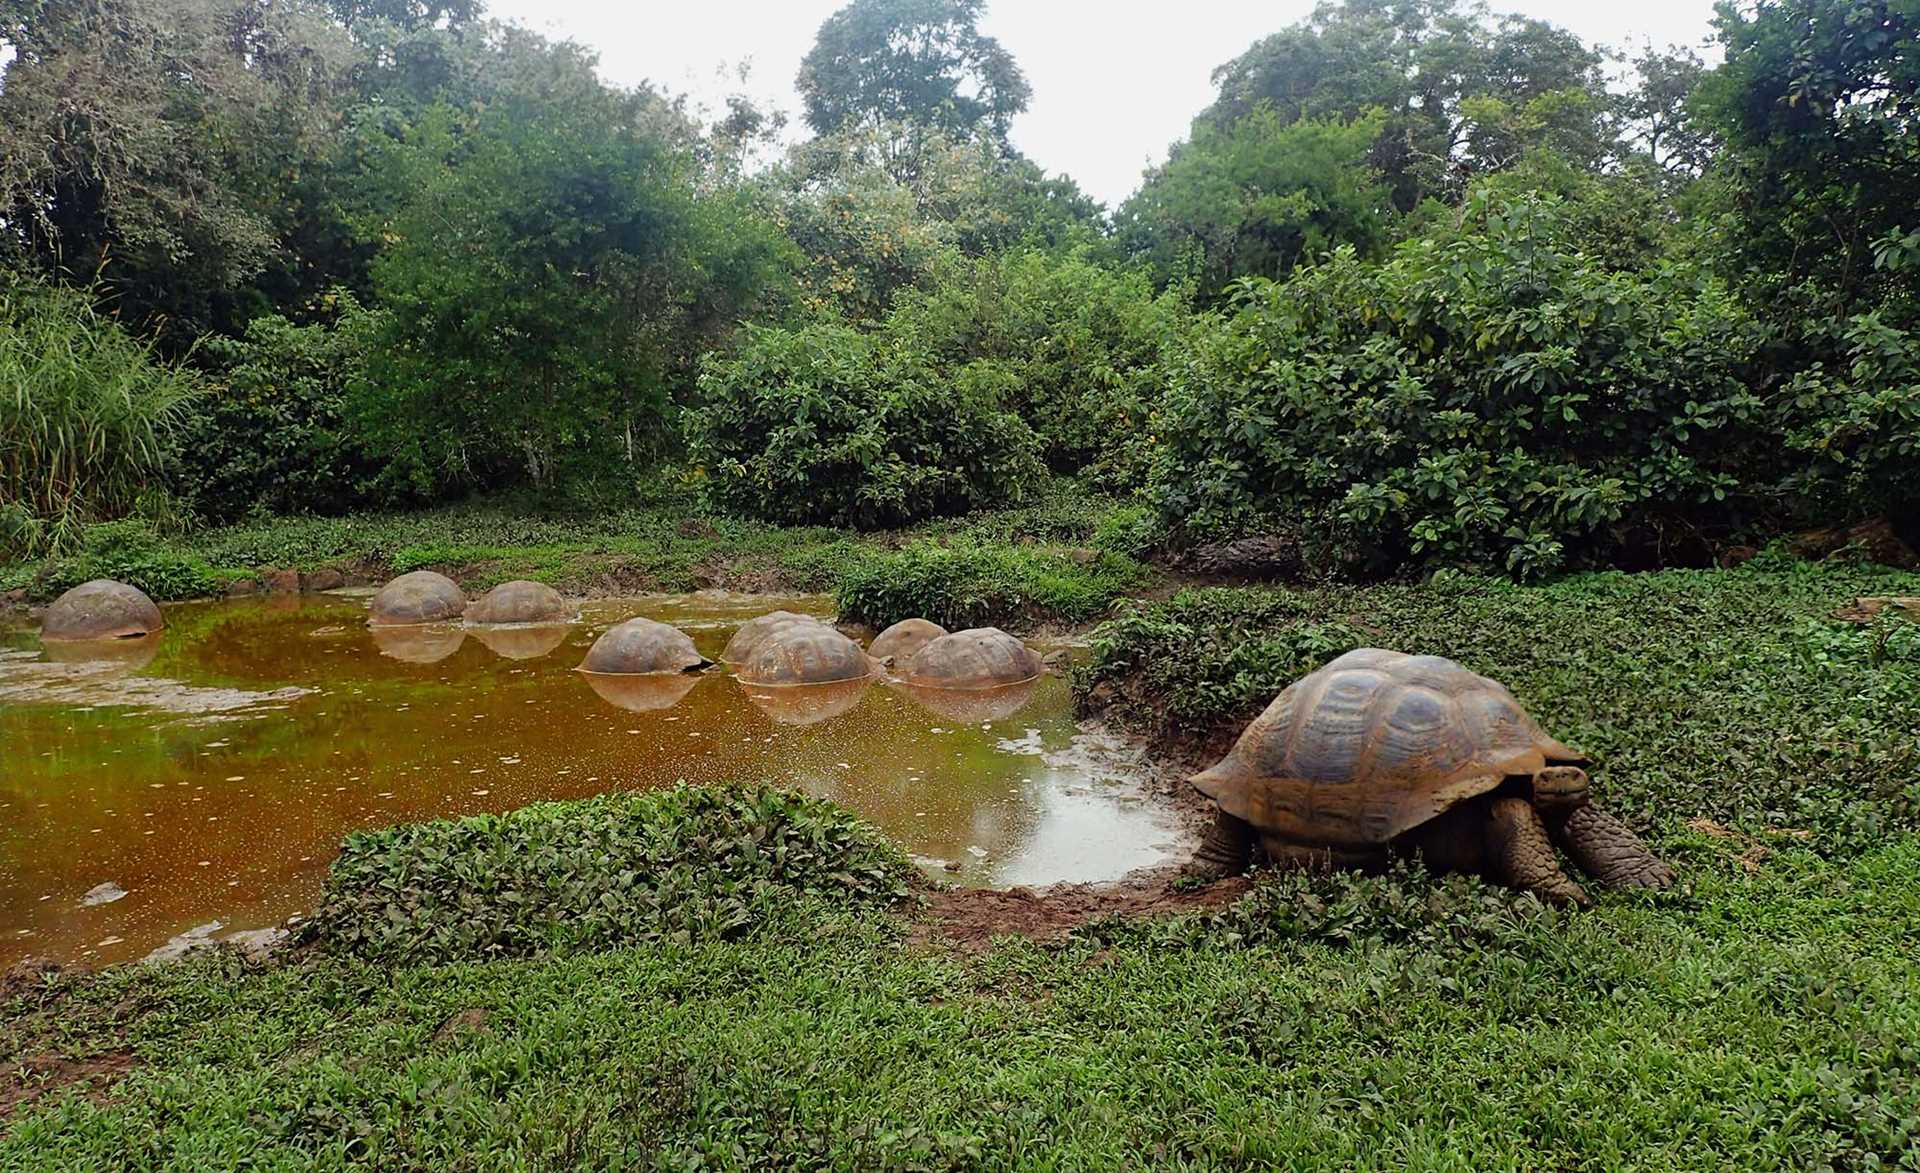 five giant tortoises